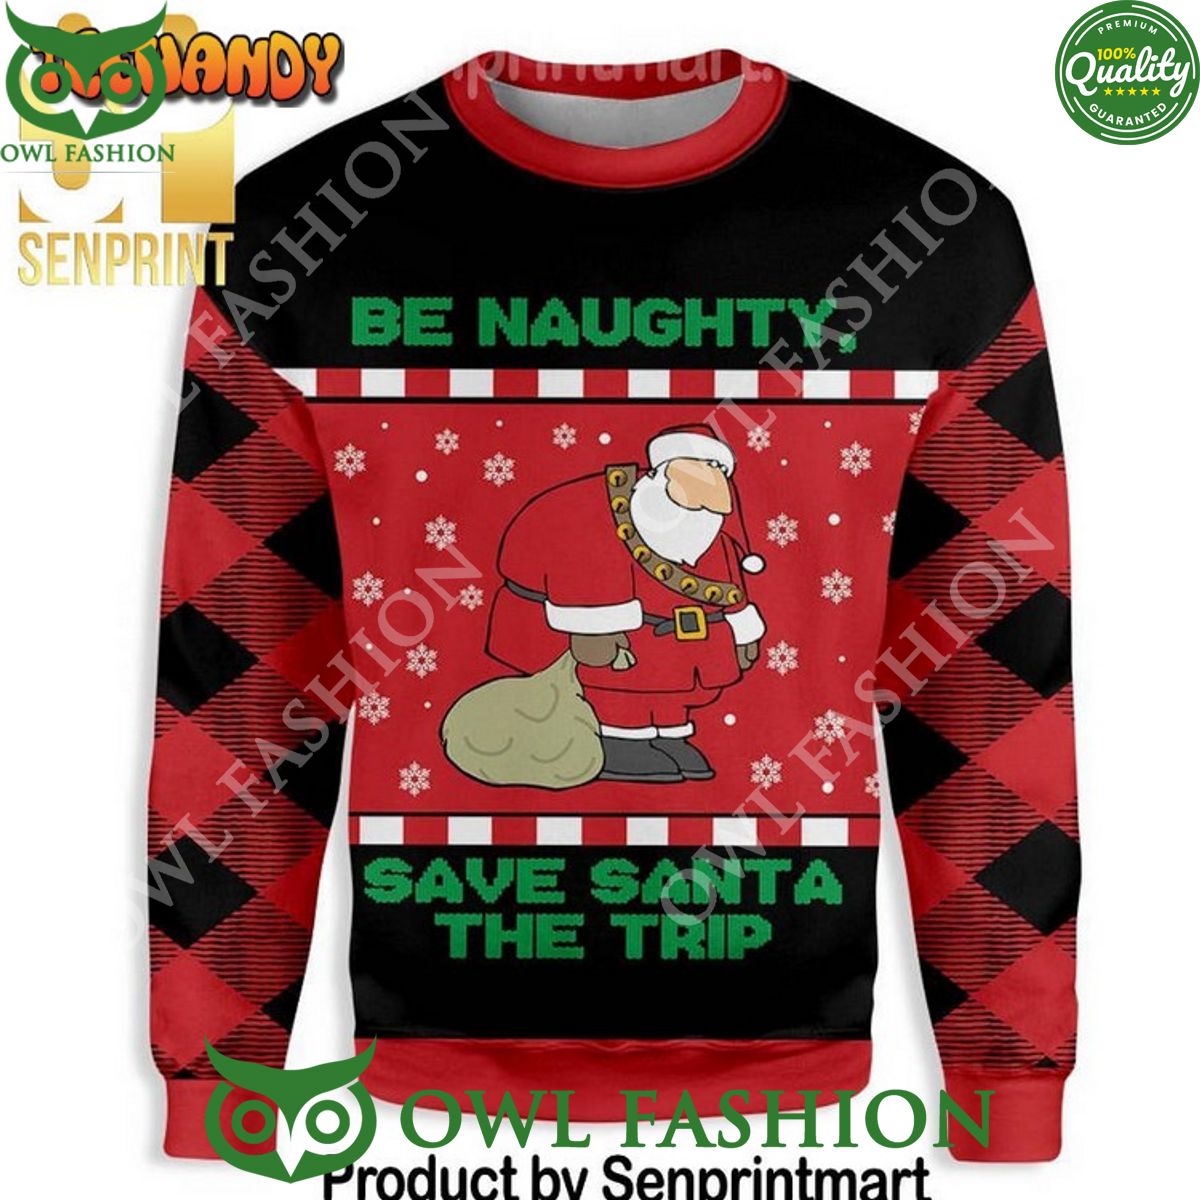 Be Naughty Save Santa The Trip Christmas Ugly Sweater